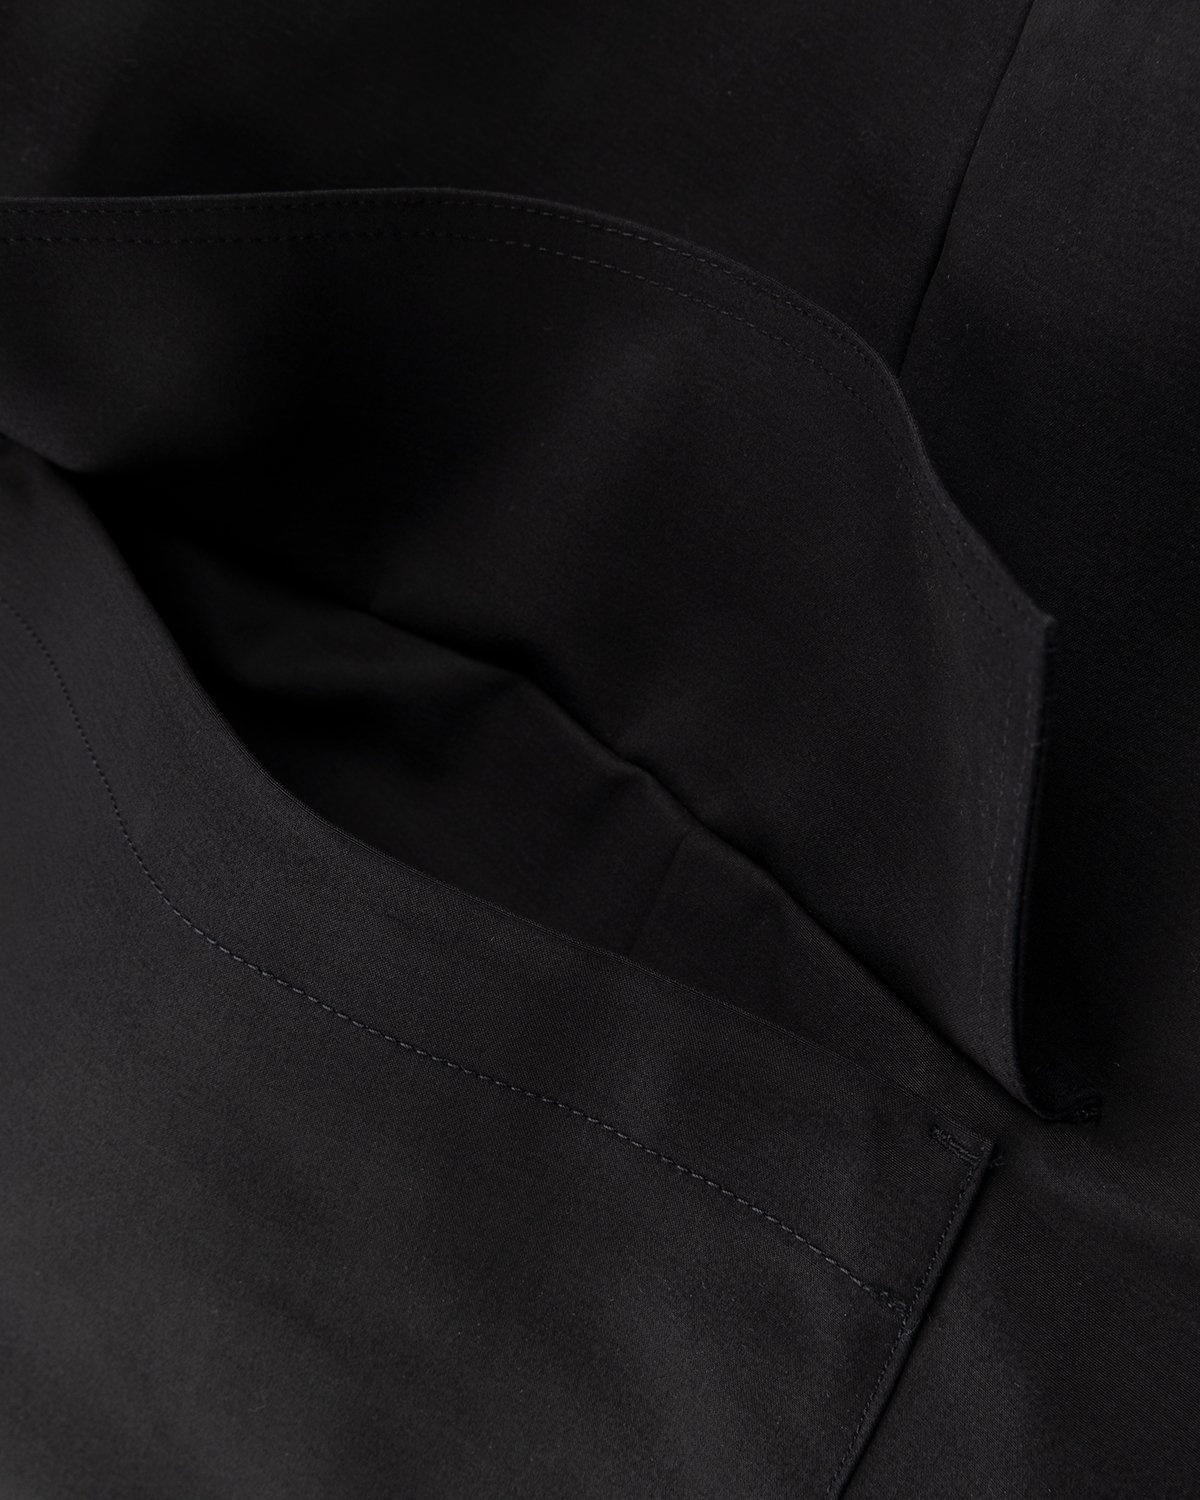 Jil Sander – Cotton Cargo Shorts Black - Cargo Shorts - Black - Image 6